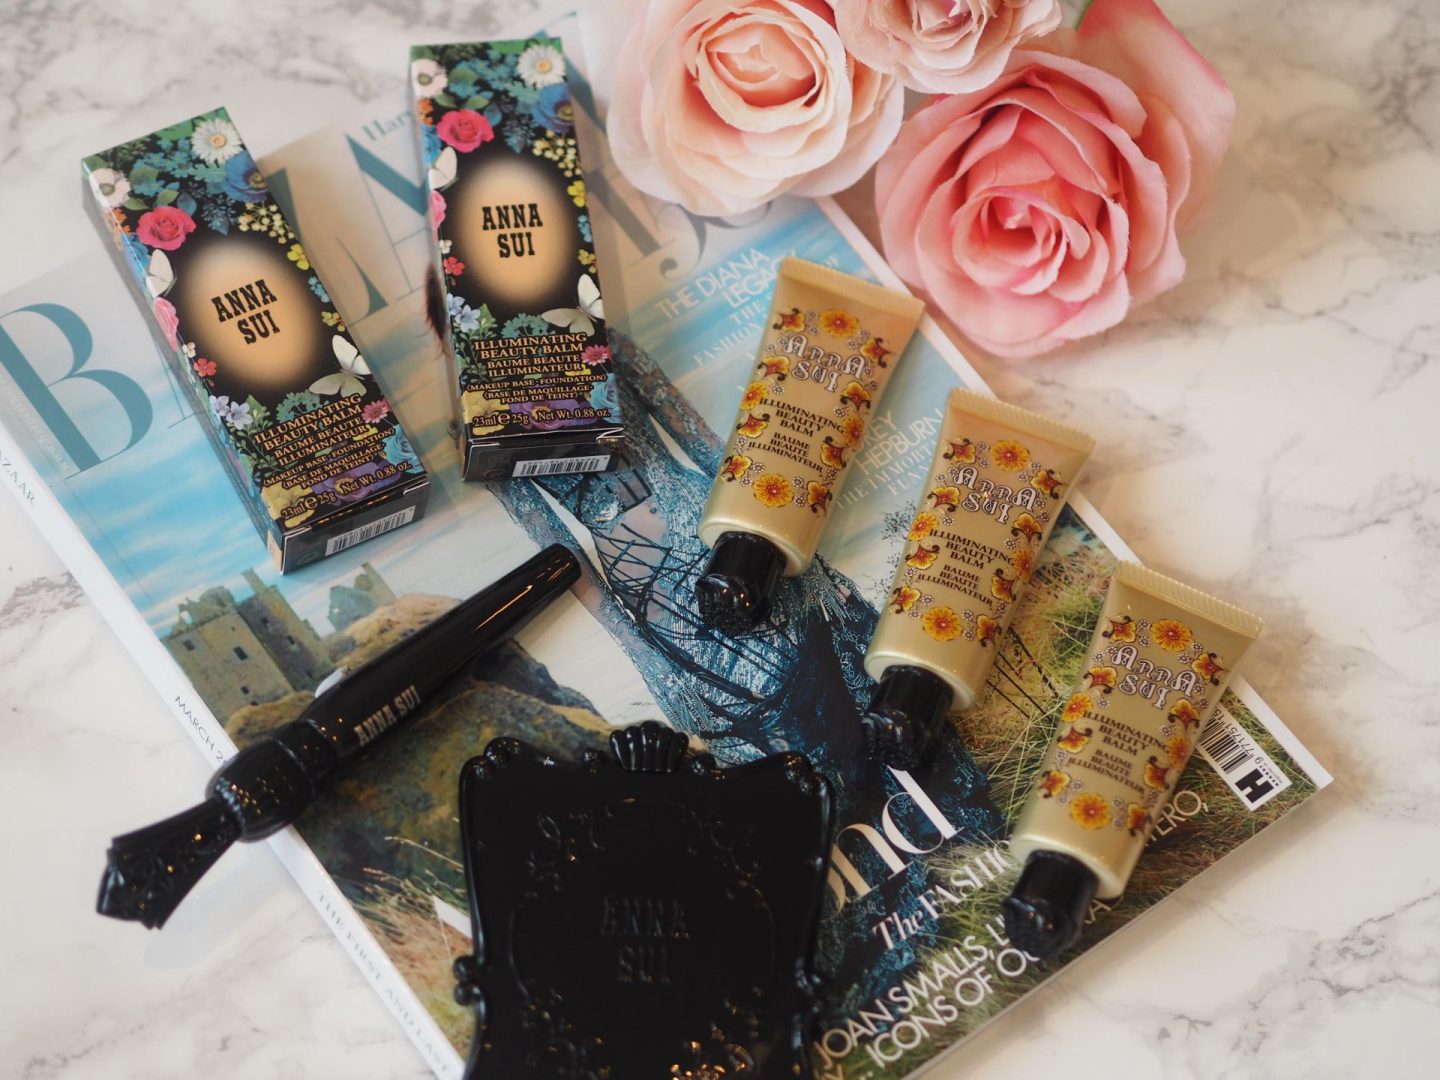 ASOS beauty and make-up haul and Anna Sui Illuminating Beauty Balm